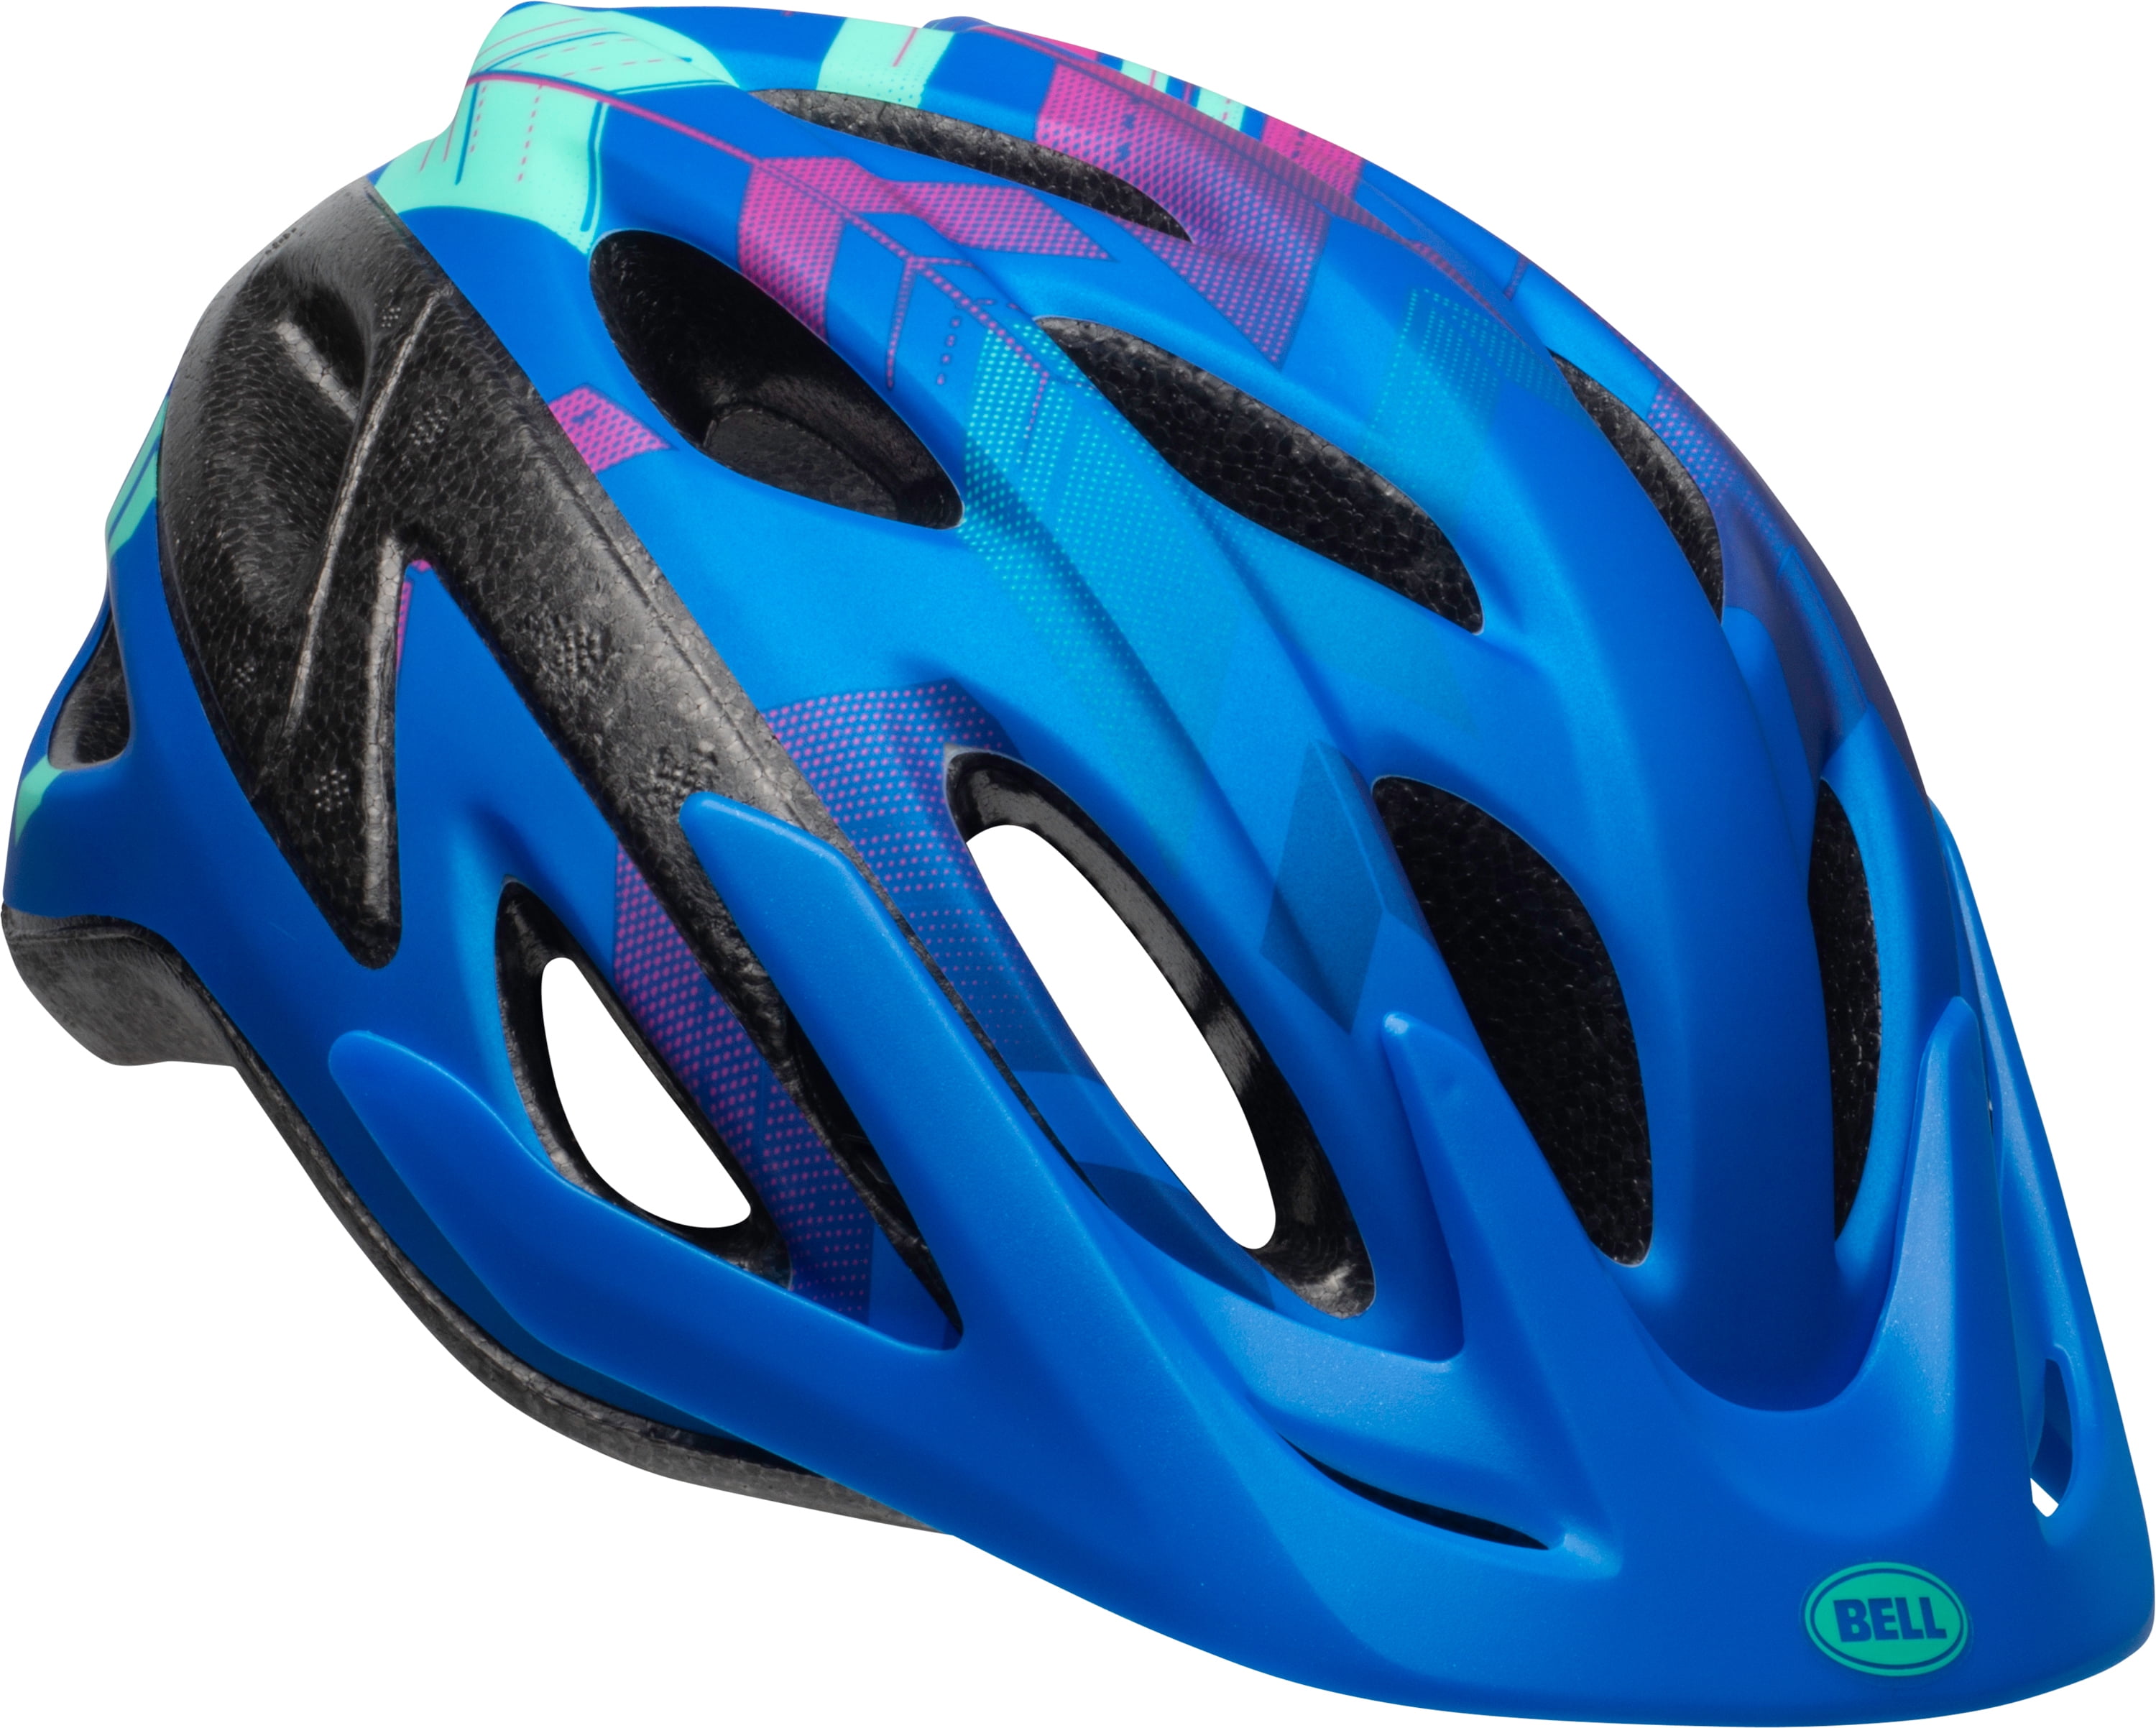 8+ Blue multi color 52-58cm Details about   Bell Escape Youth Bike Helmet With Light 